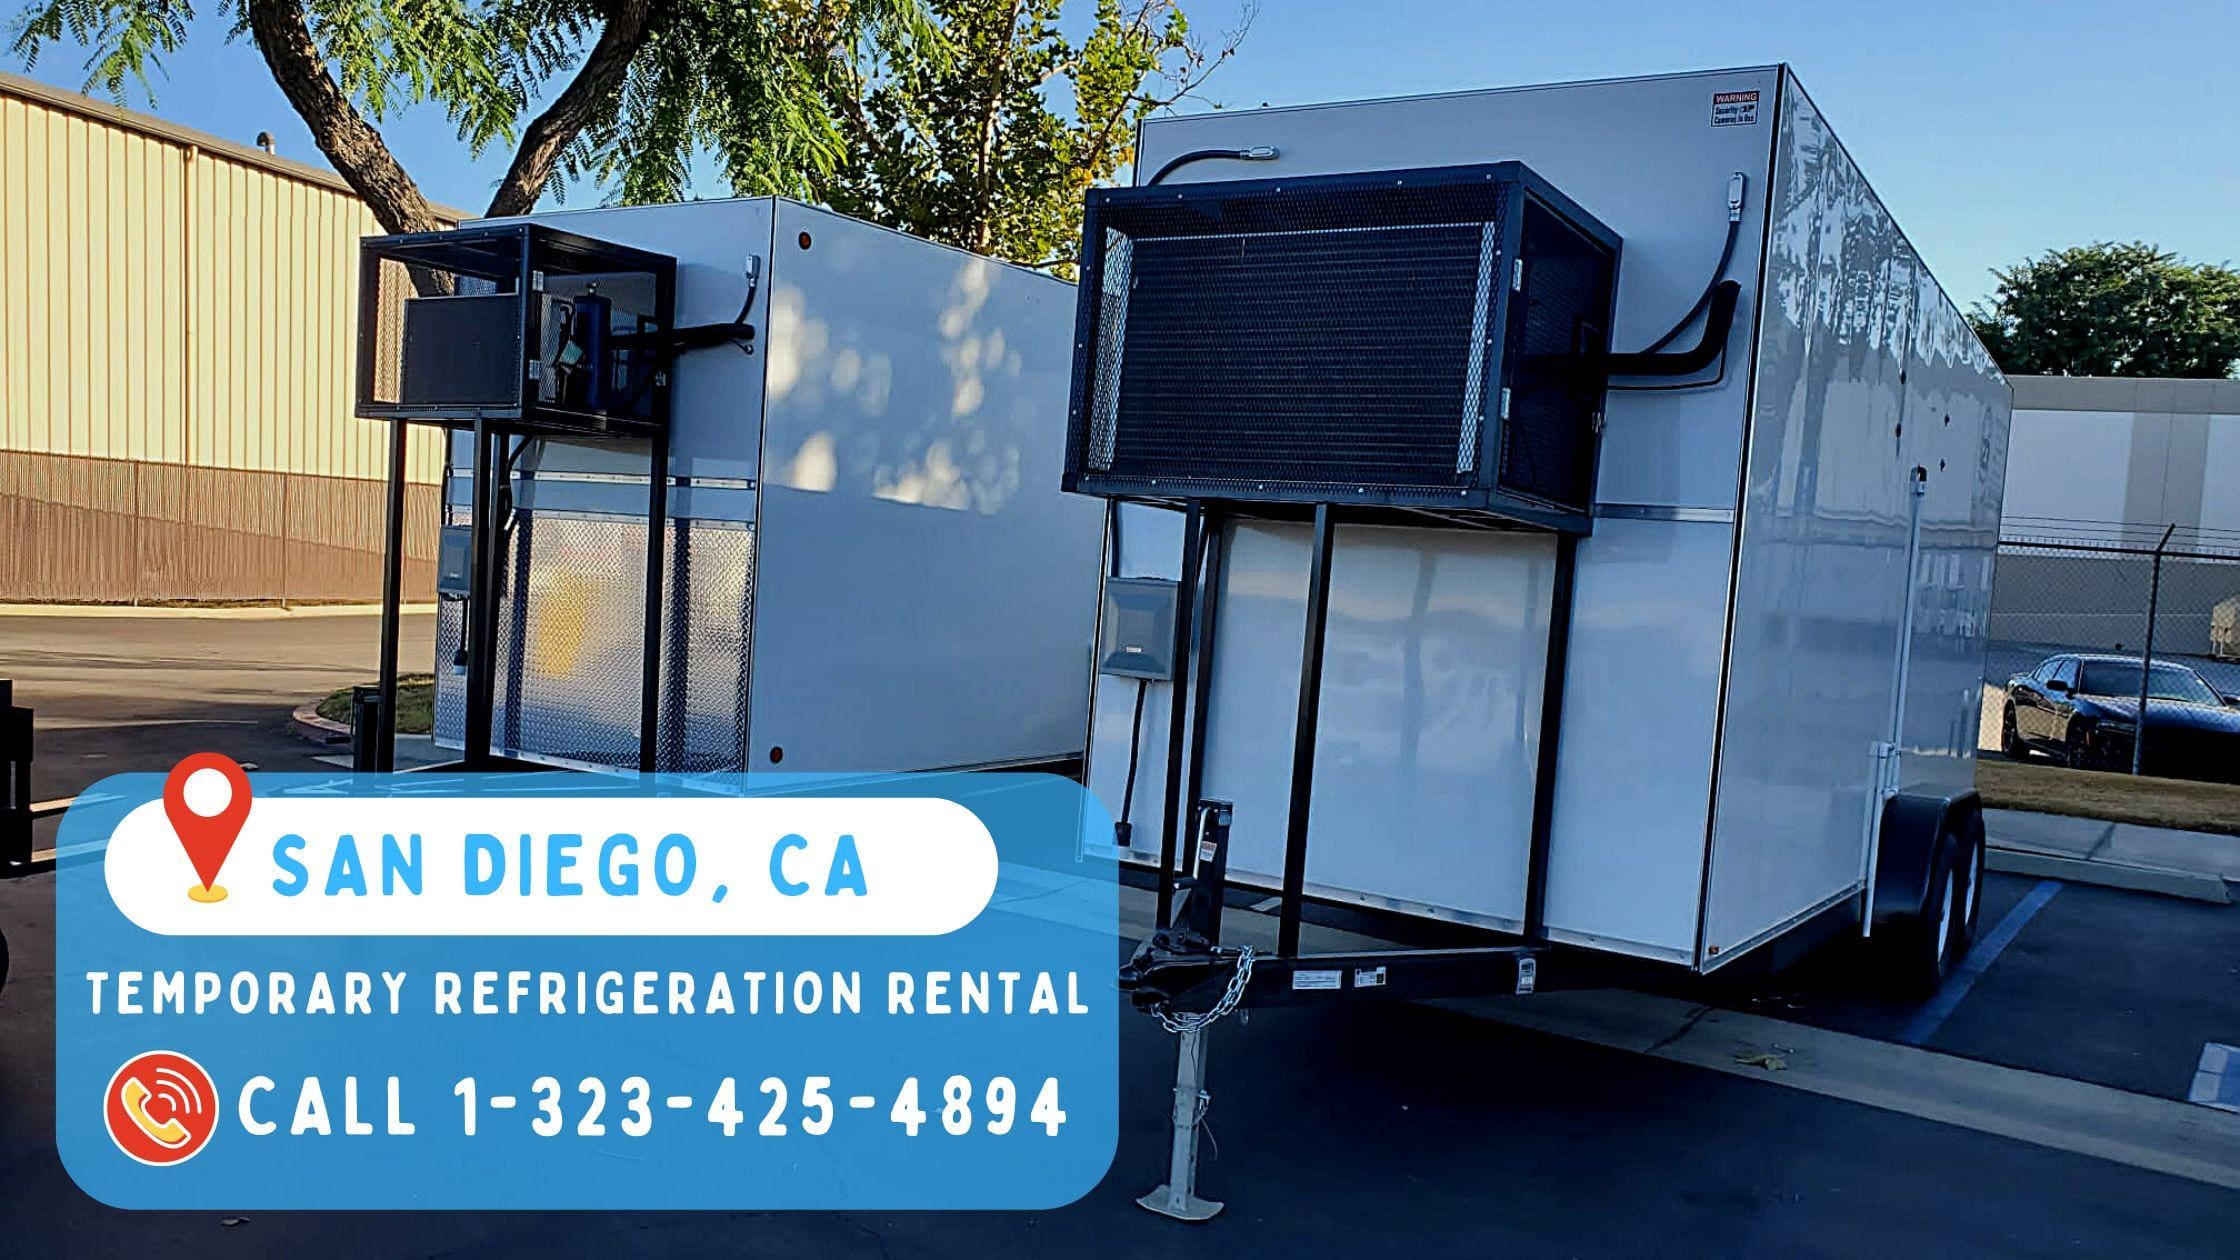 Temporary Refrigeration Rental in San Diego